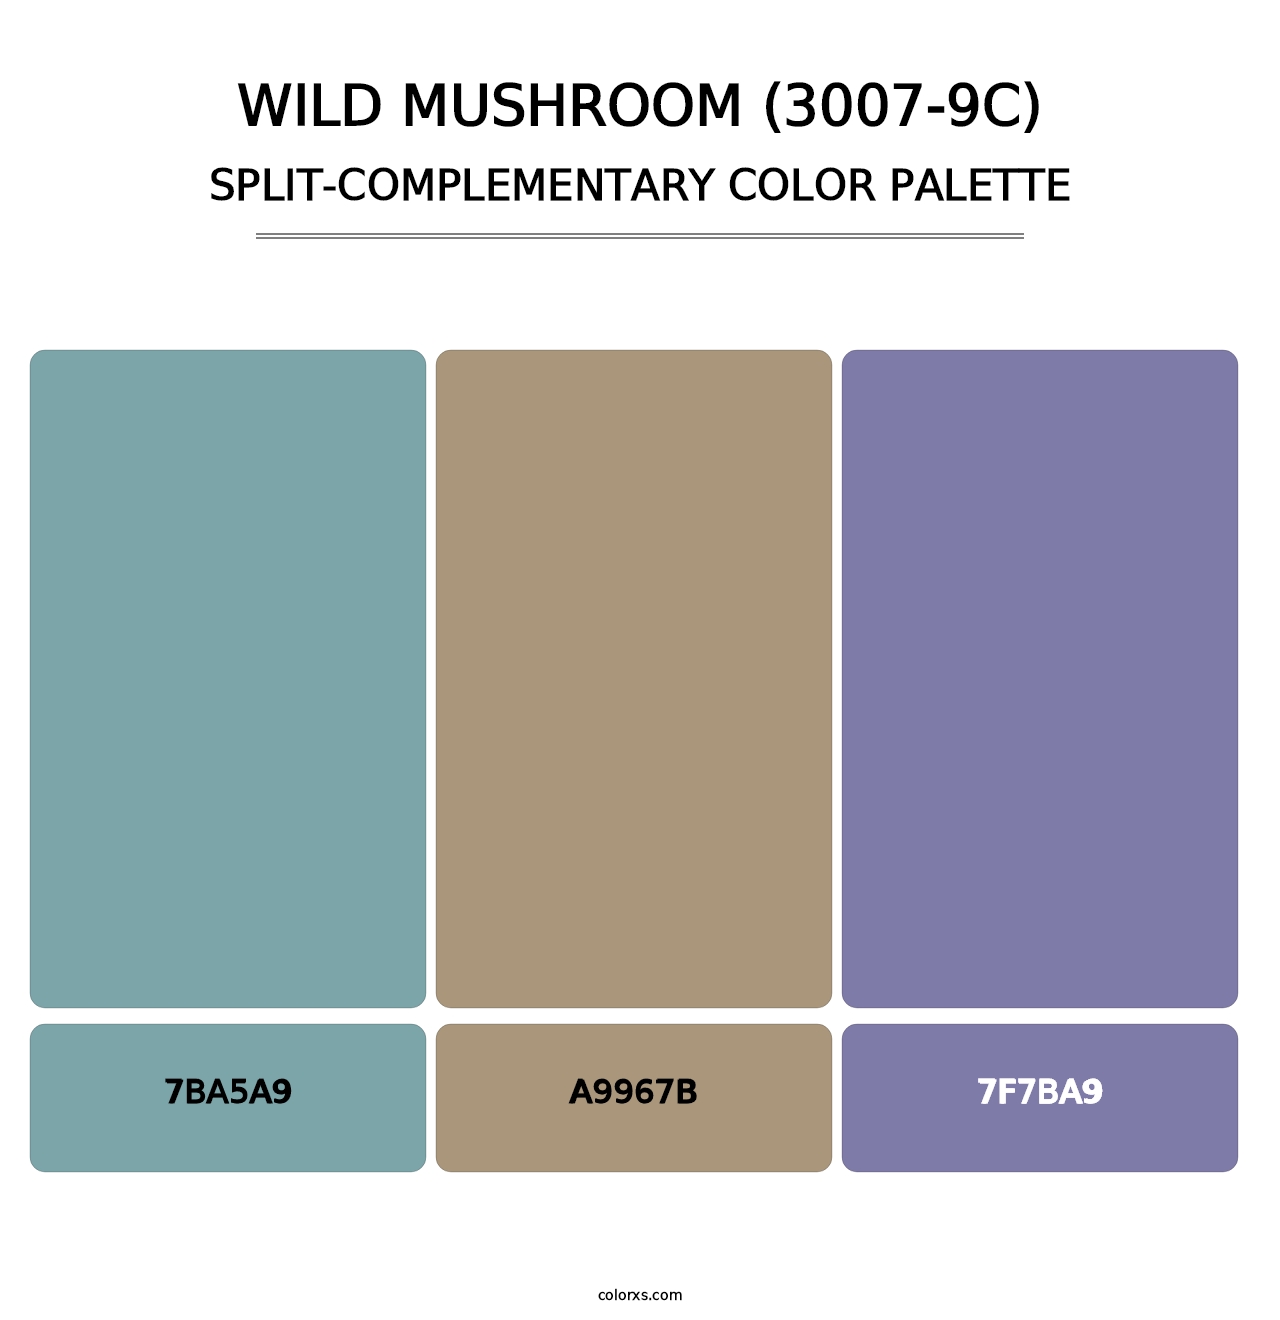 Wild Mushroom (3007-9C) - Split-Complementary Color Palette